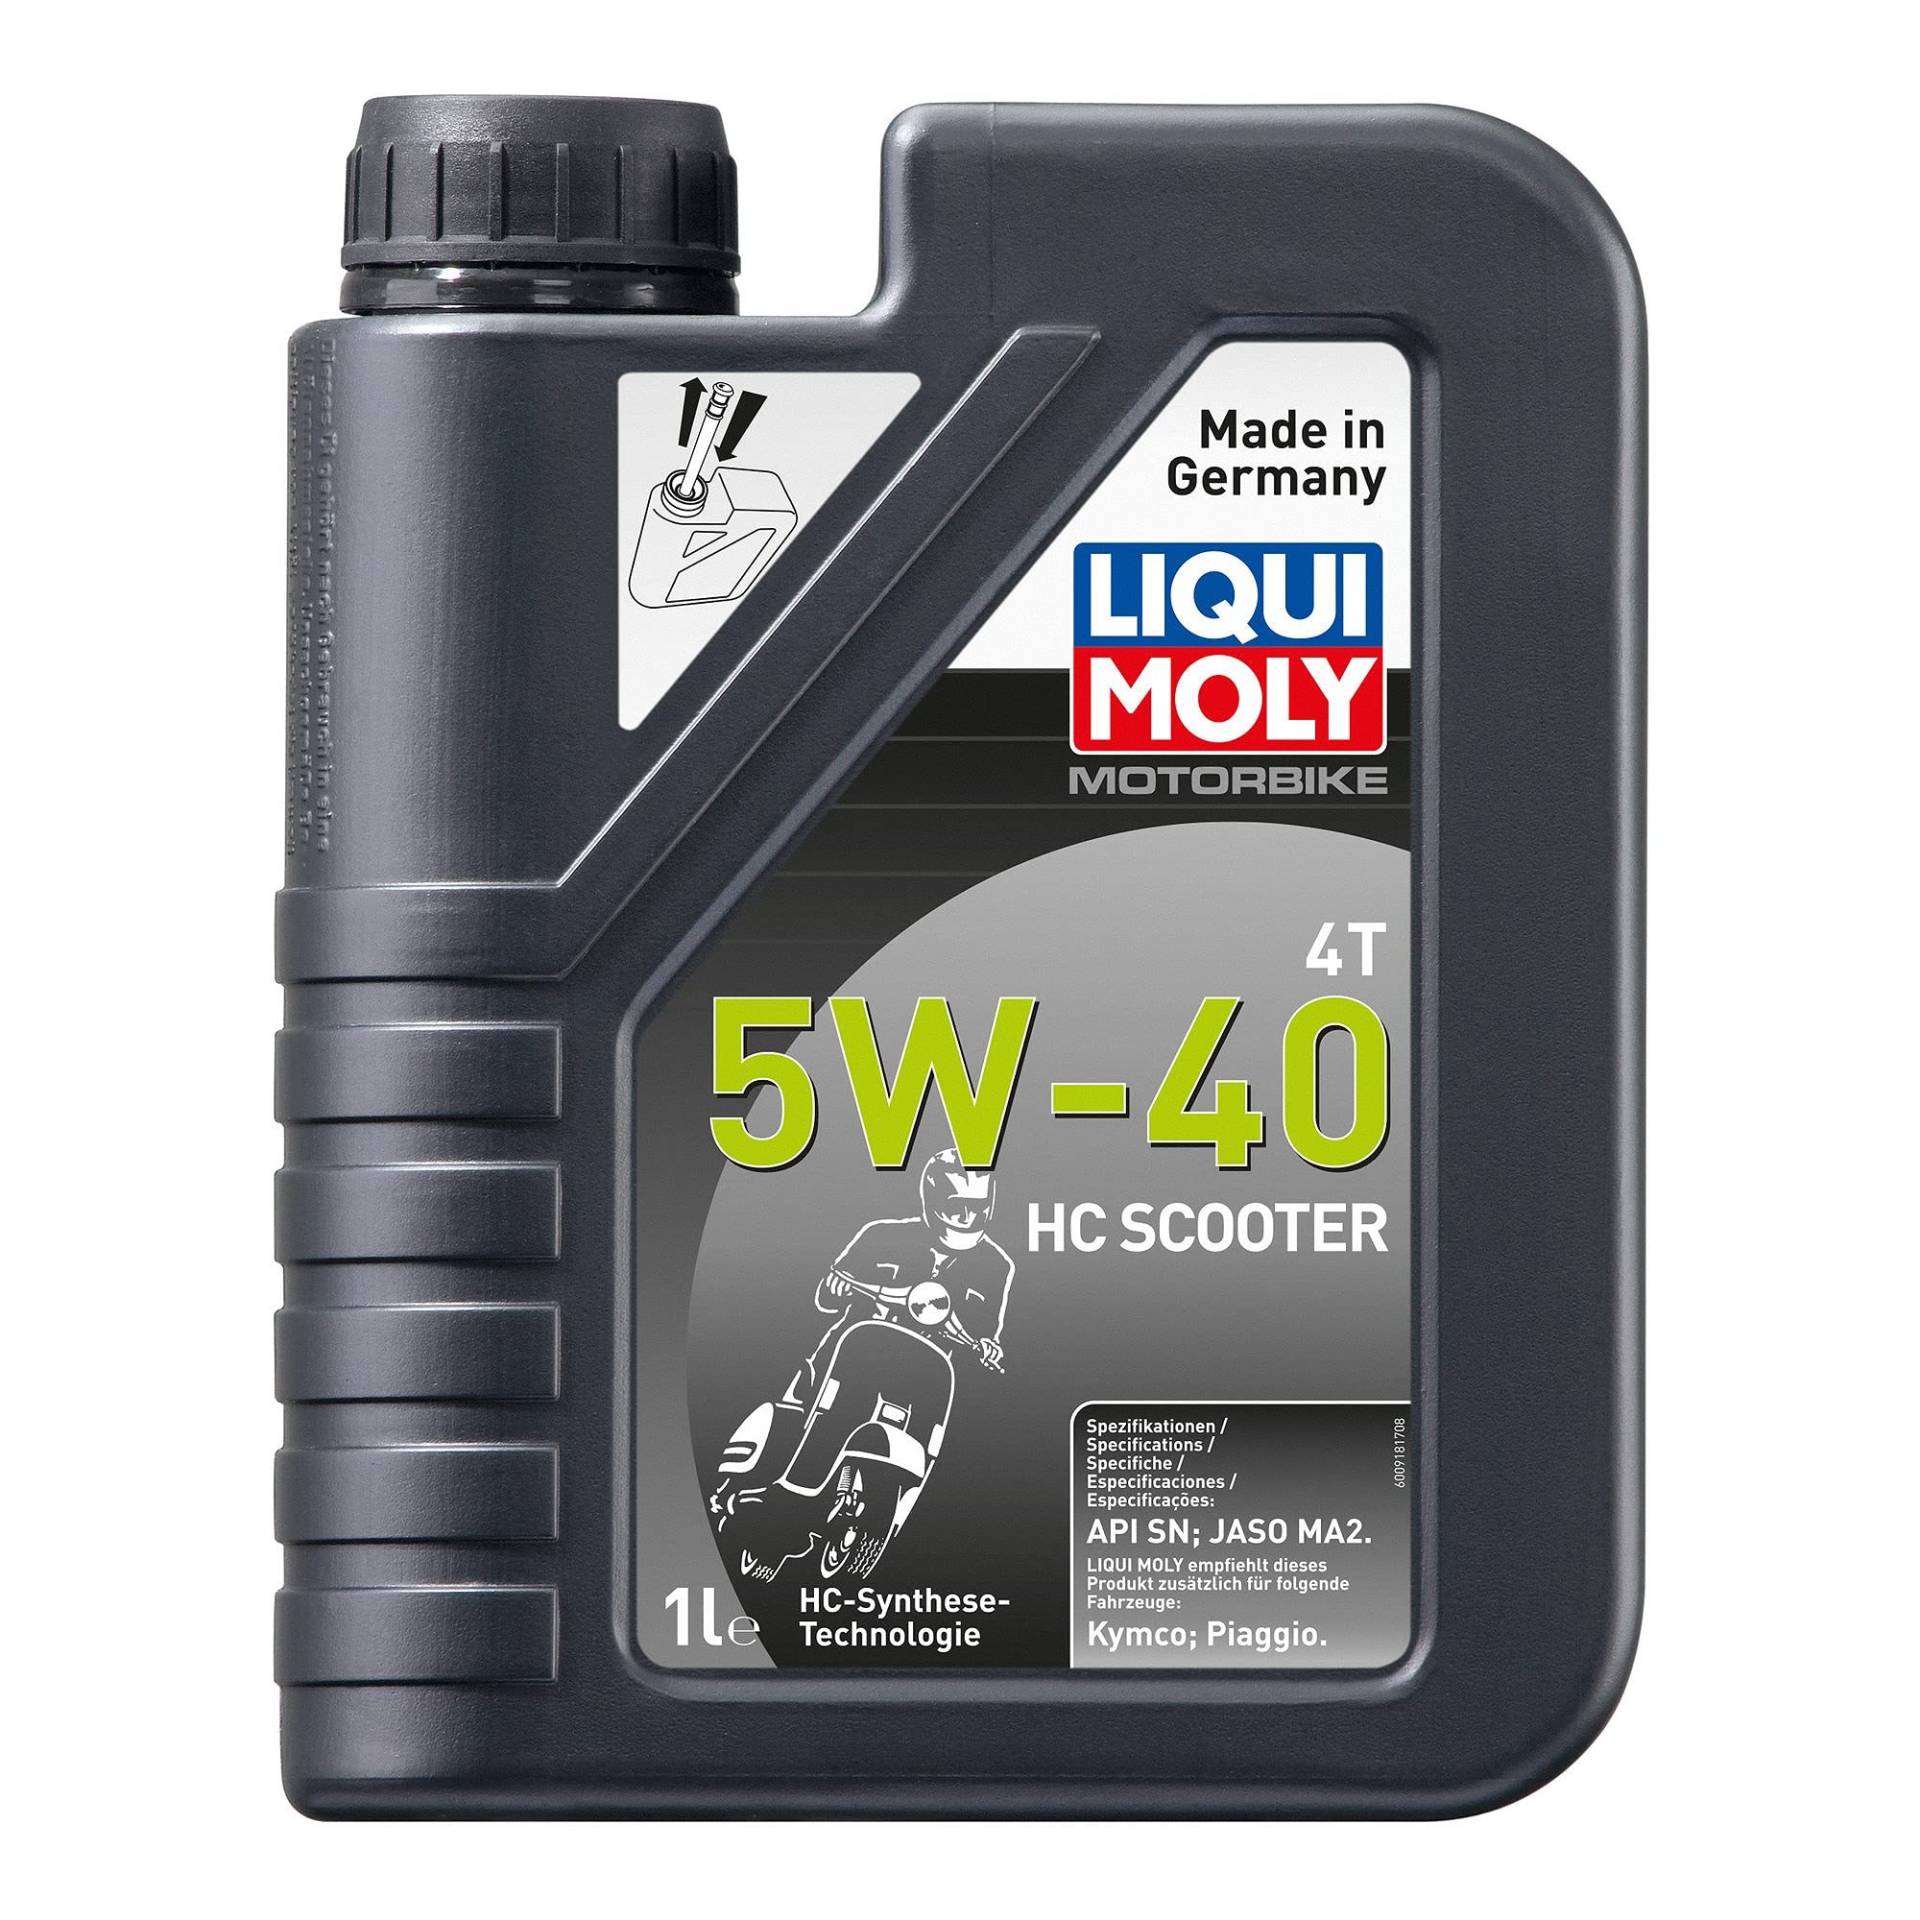 LIQUI MOLY Motorbike 4T 5W-40 HC Scooter | 1 L | Motorrad Synthesetechnologie Motoröl | Art.-Nr.: 20829 von Liqui Moly